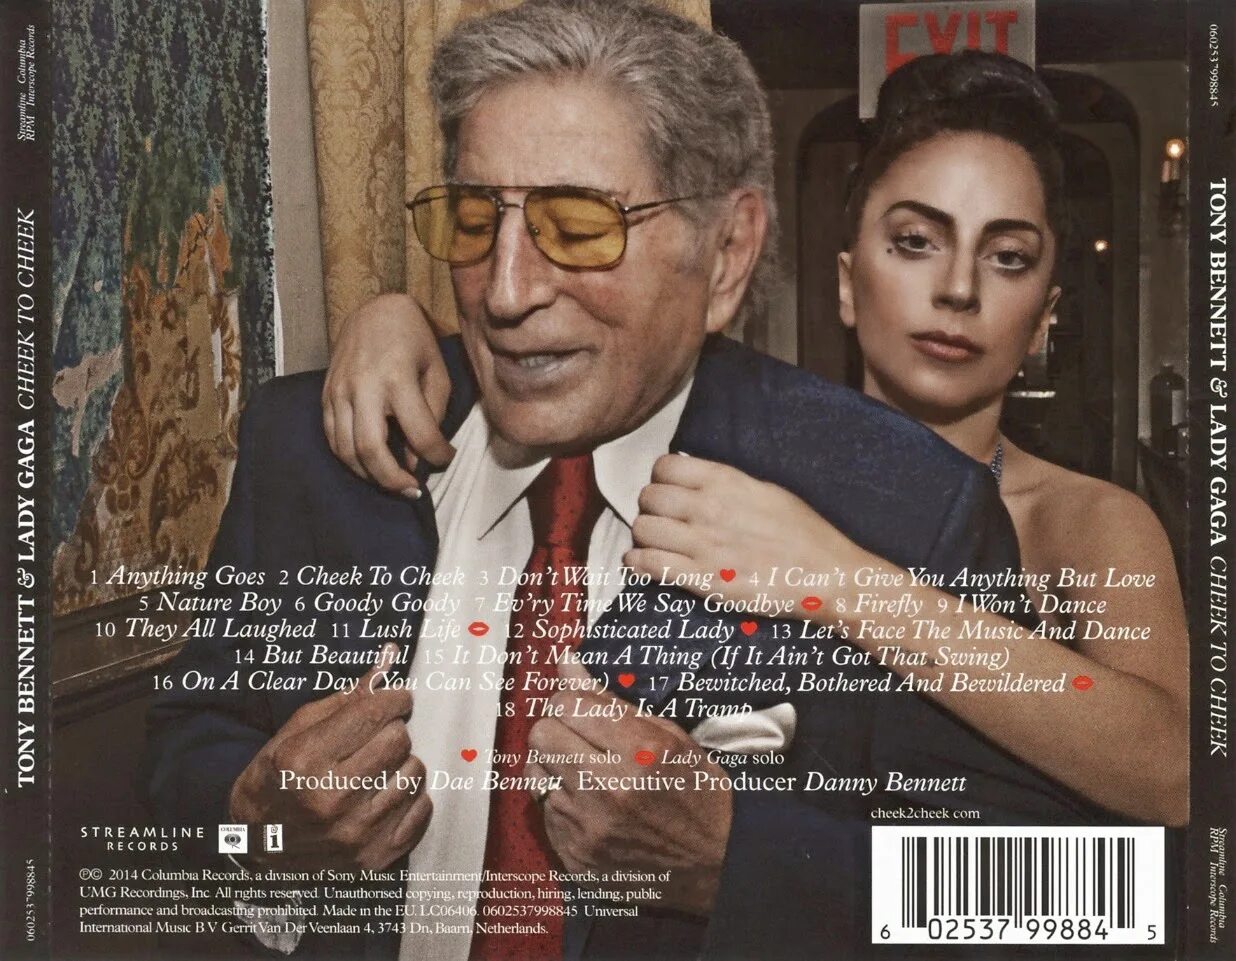 Cheek to cheek. Tony Bennett & Lady Gaga - Cheek to Cheek. Lady Gaga & Tony Bennett - Love for sale (180 gr). Обложки альбомов Tony Bennett & Lady Gaga - 2021 - Love for sale.